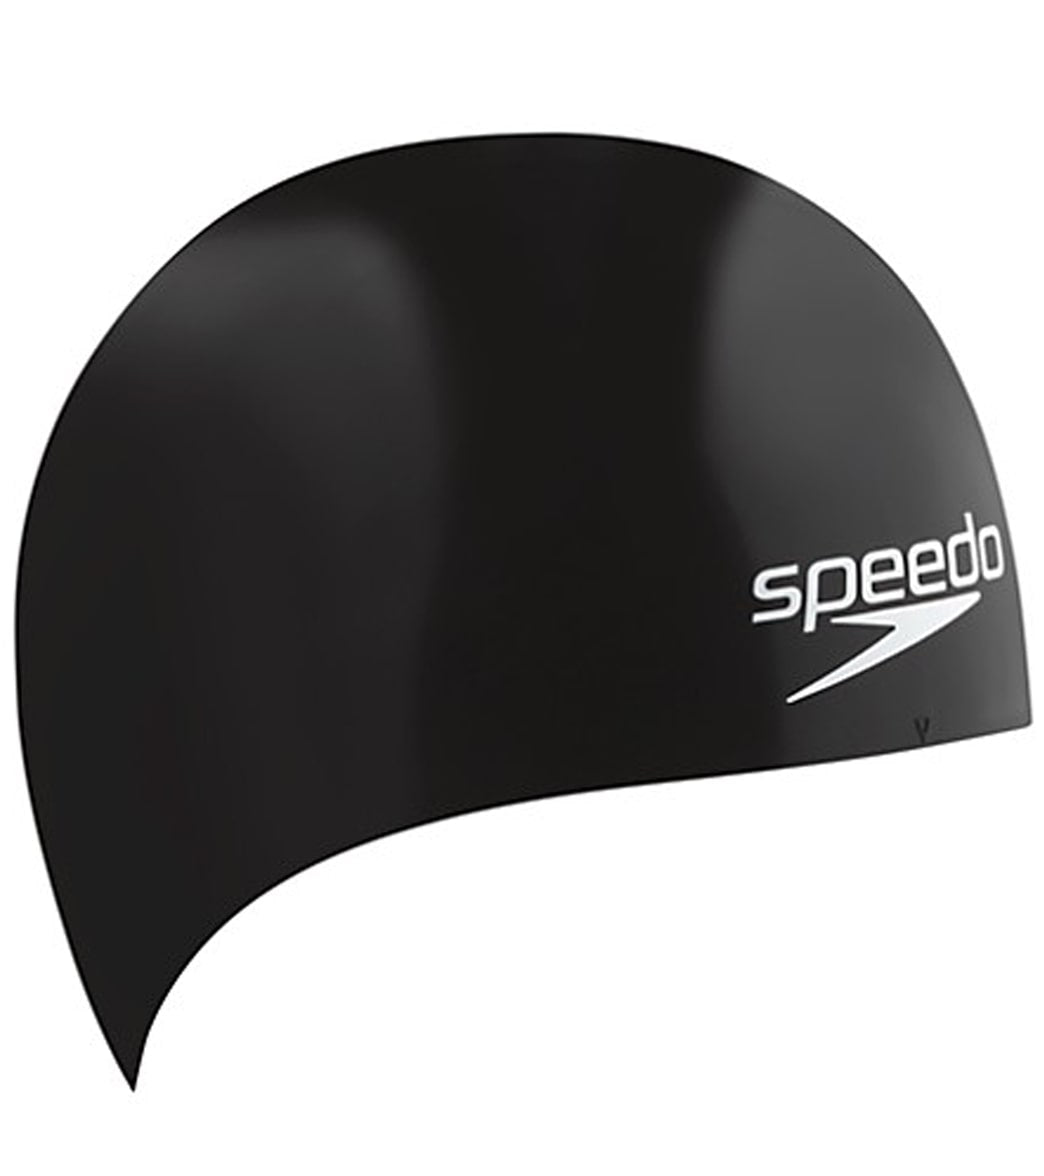 Speedo Fastskin Silicone Swim Cap at SwimOutlet.com